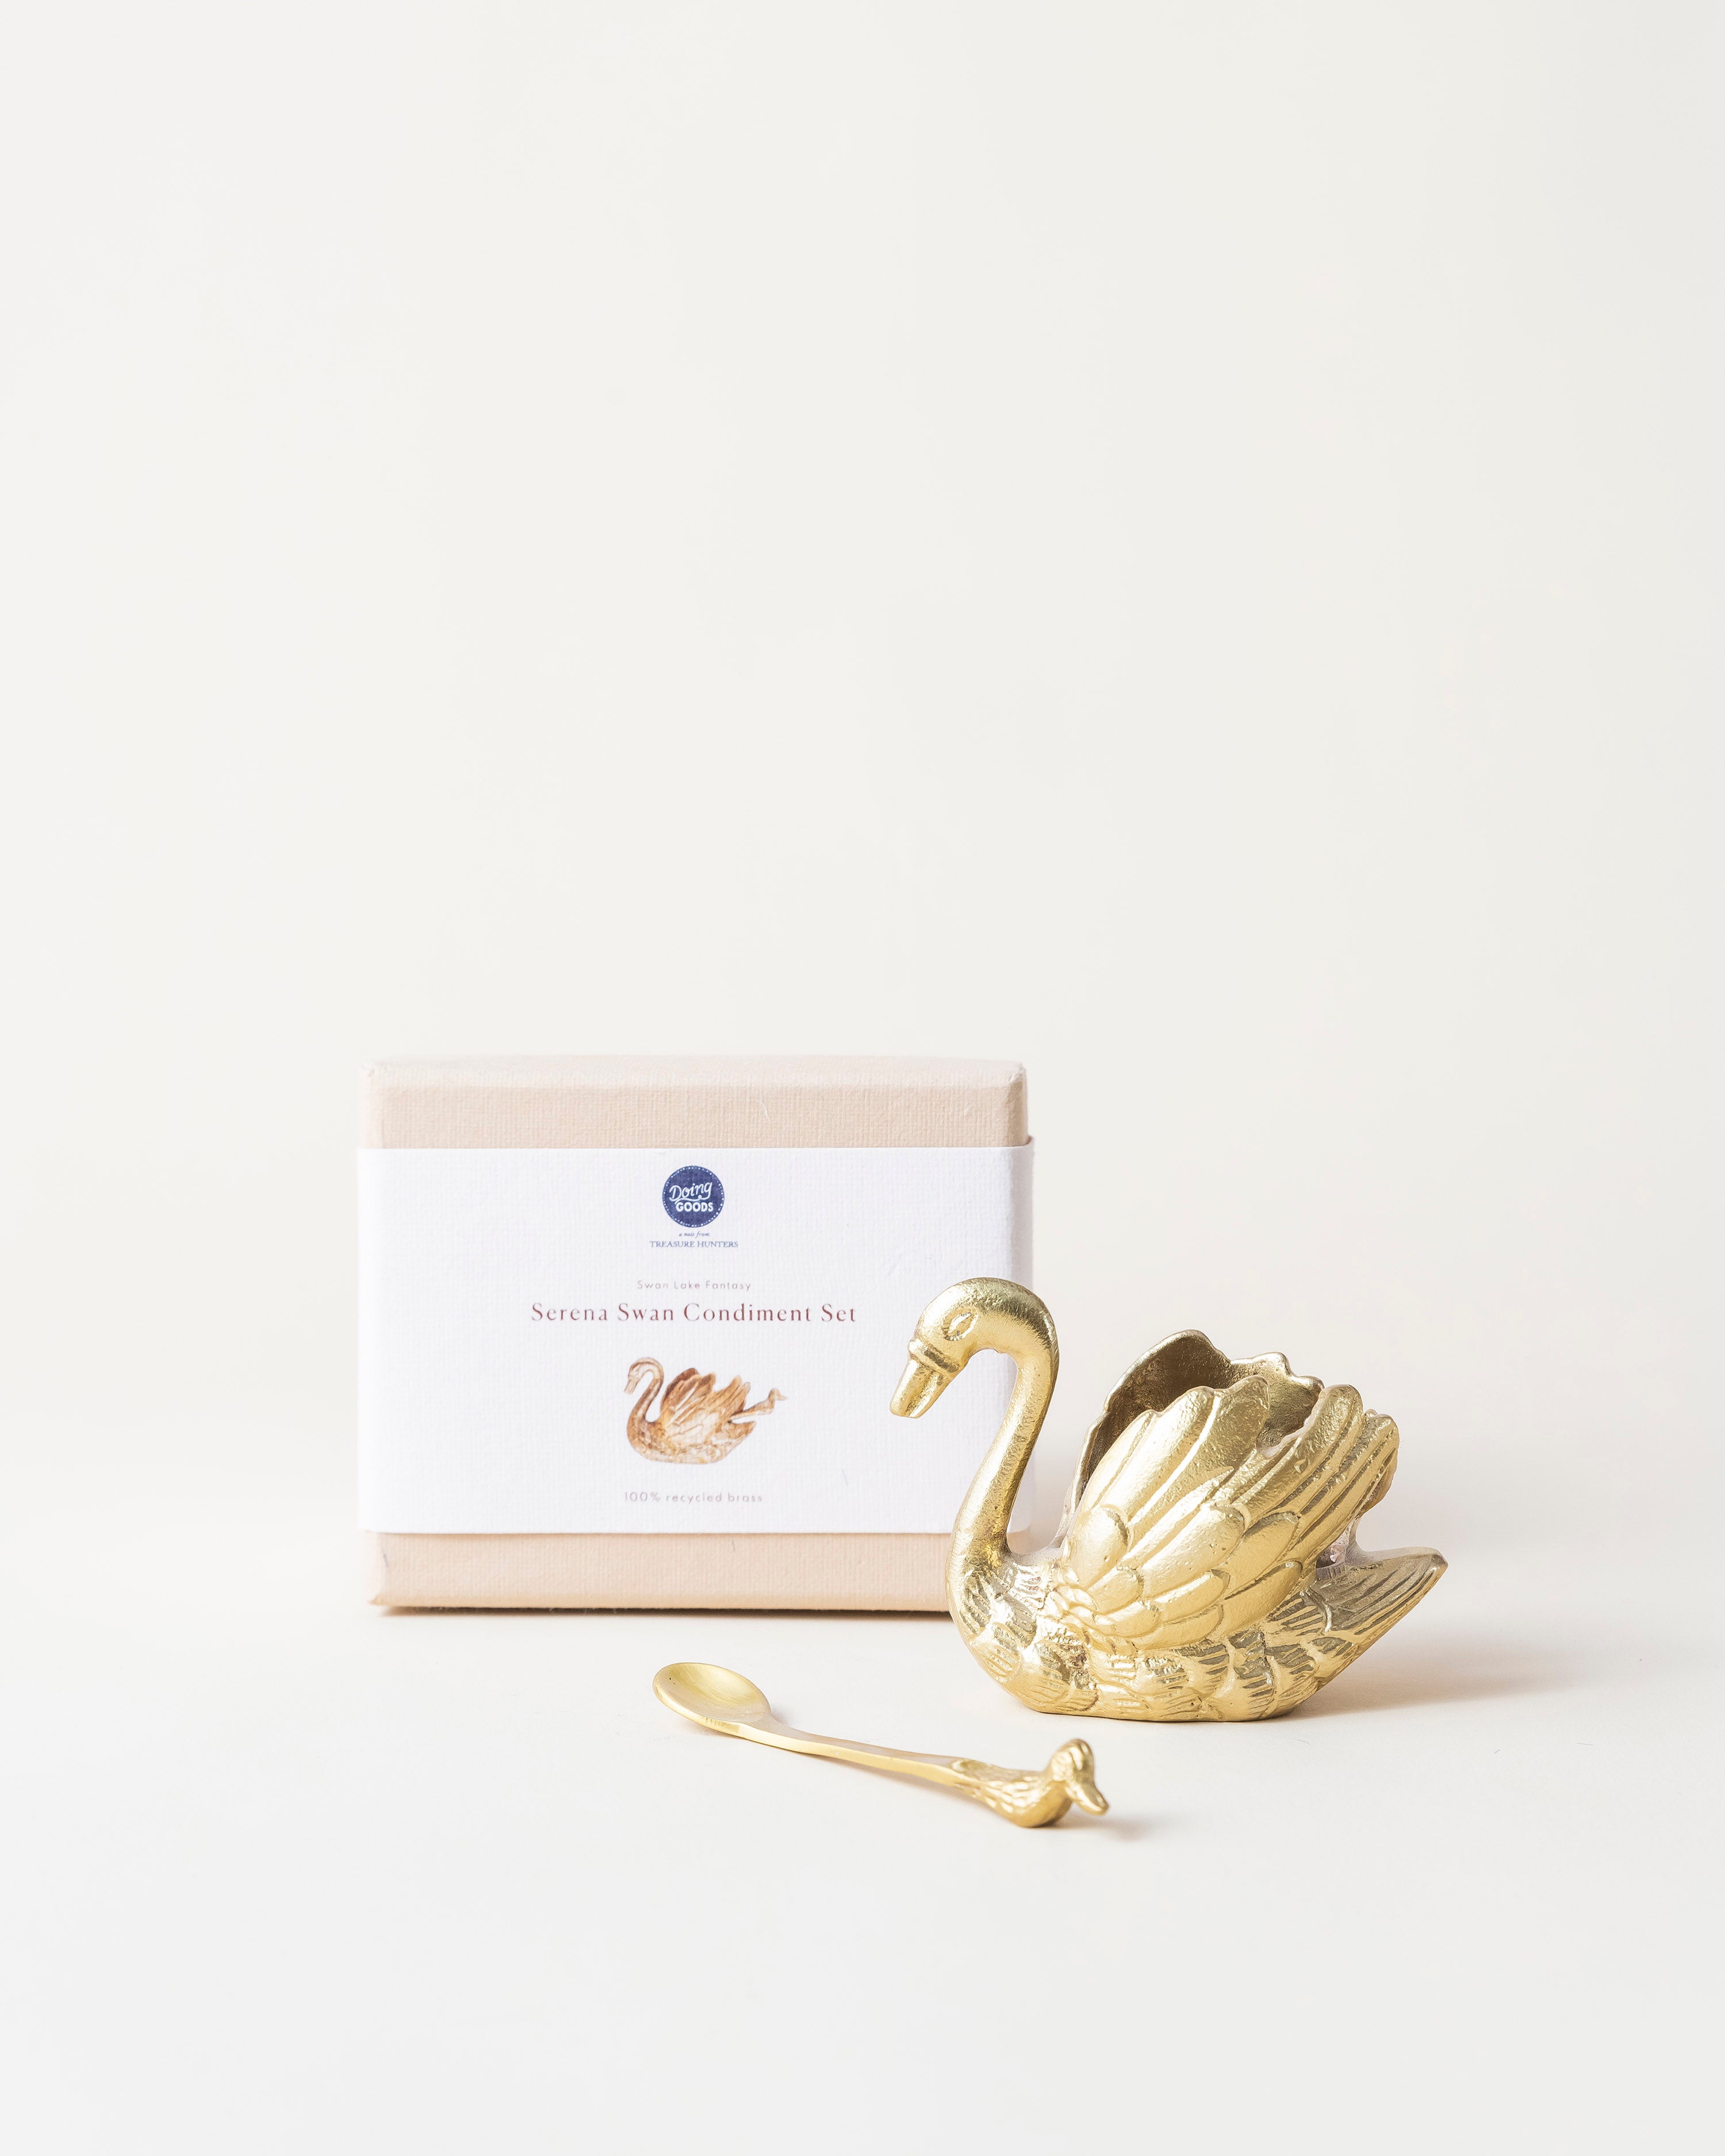 Serena Swan Condiment Set in Giftbox